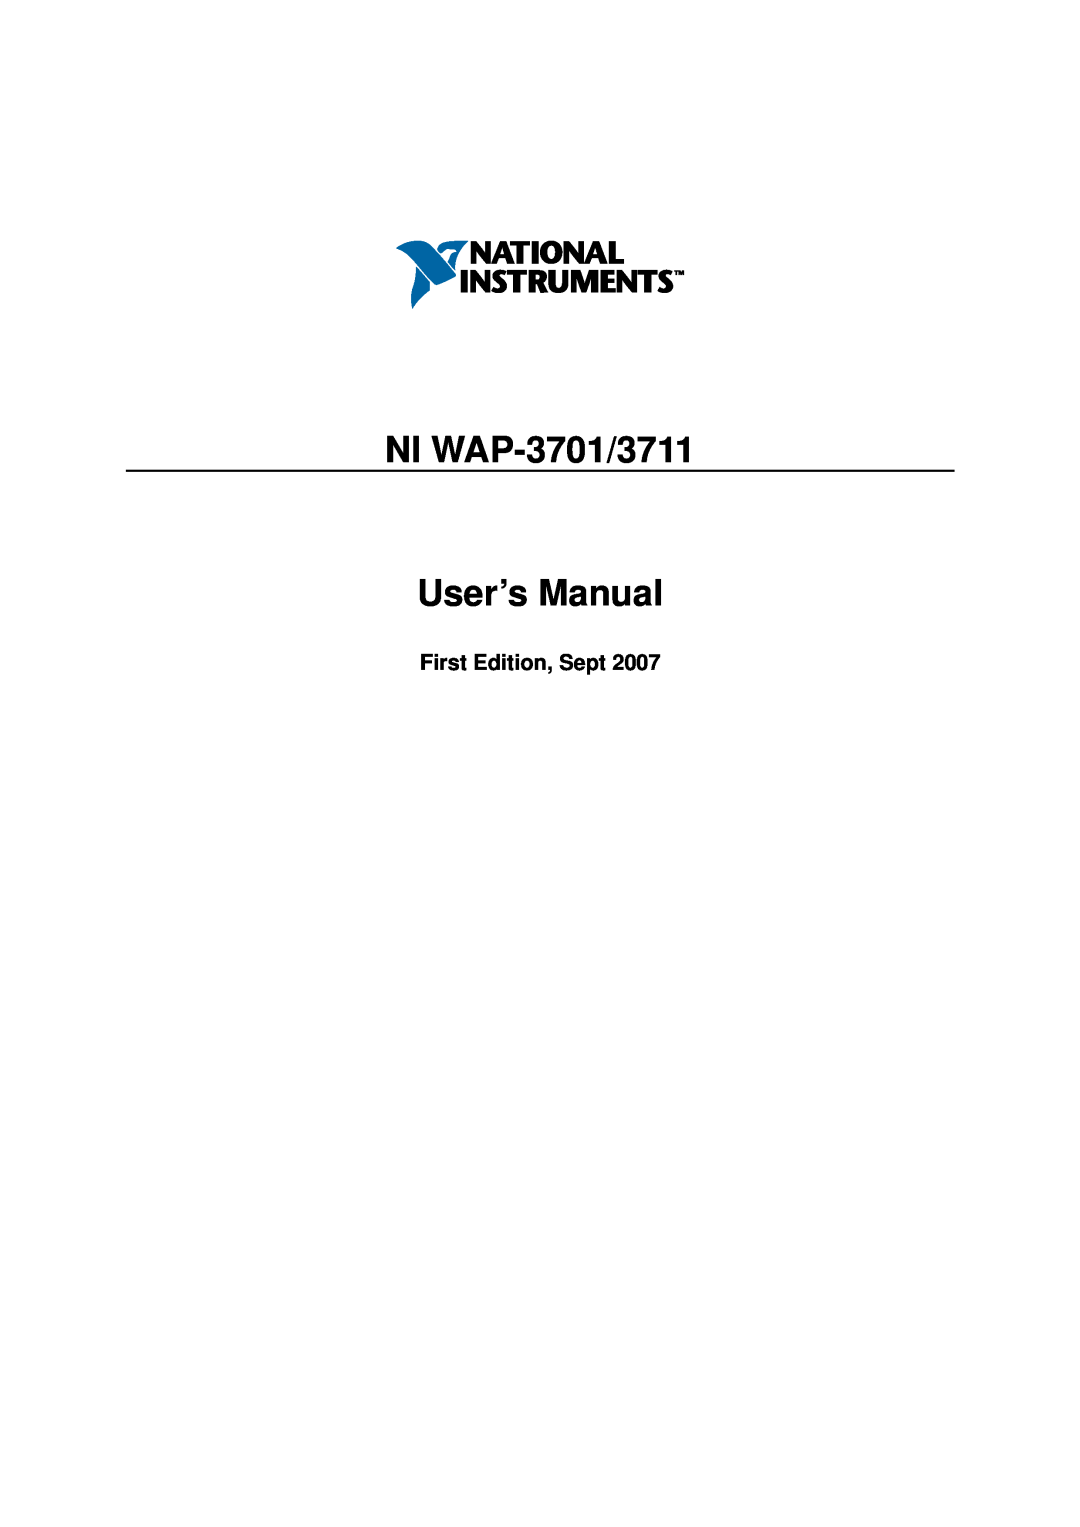 National Instruments WAP-3711 user manual NI WAP-3701/3711 User’s Manual, First Edition, Sept 